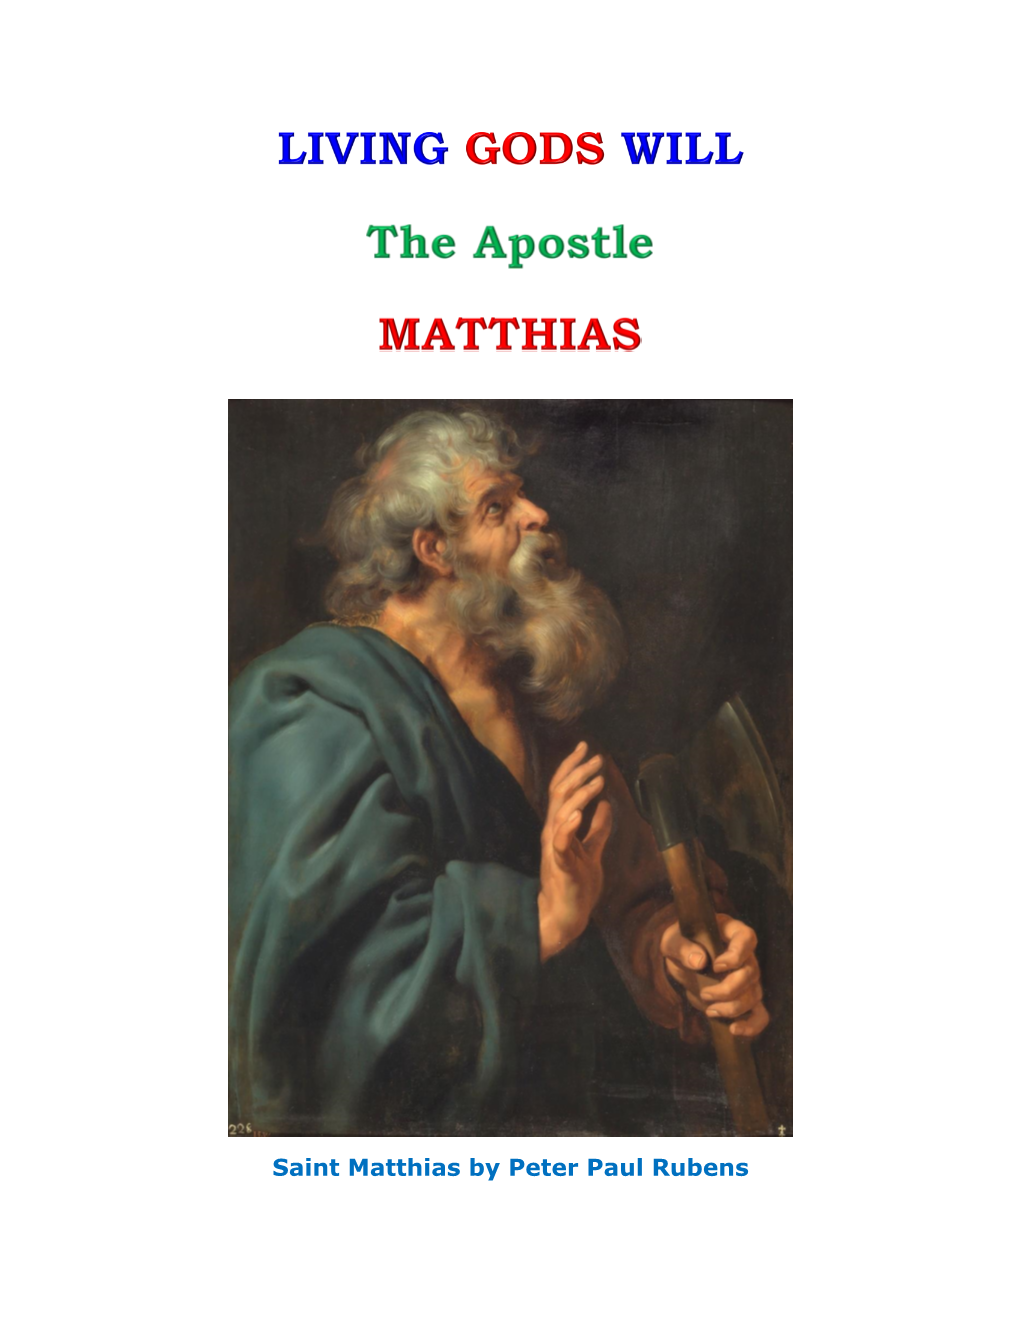 Saint Matthias by Peter Paul Rubens the Apostle MATTHIAS Page 1